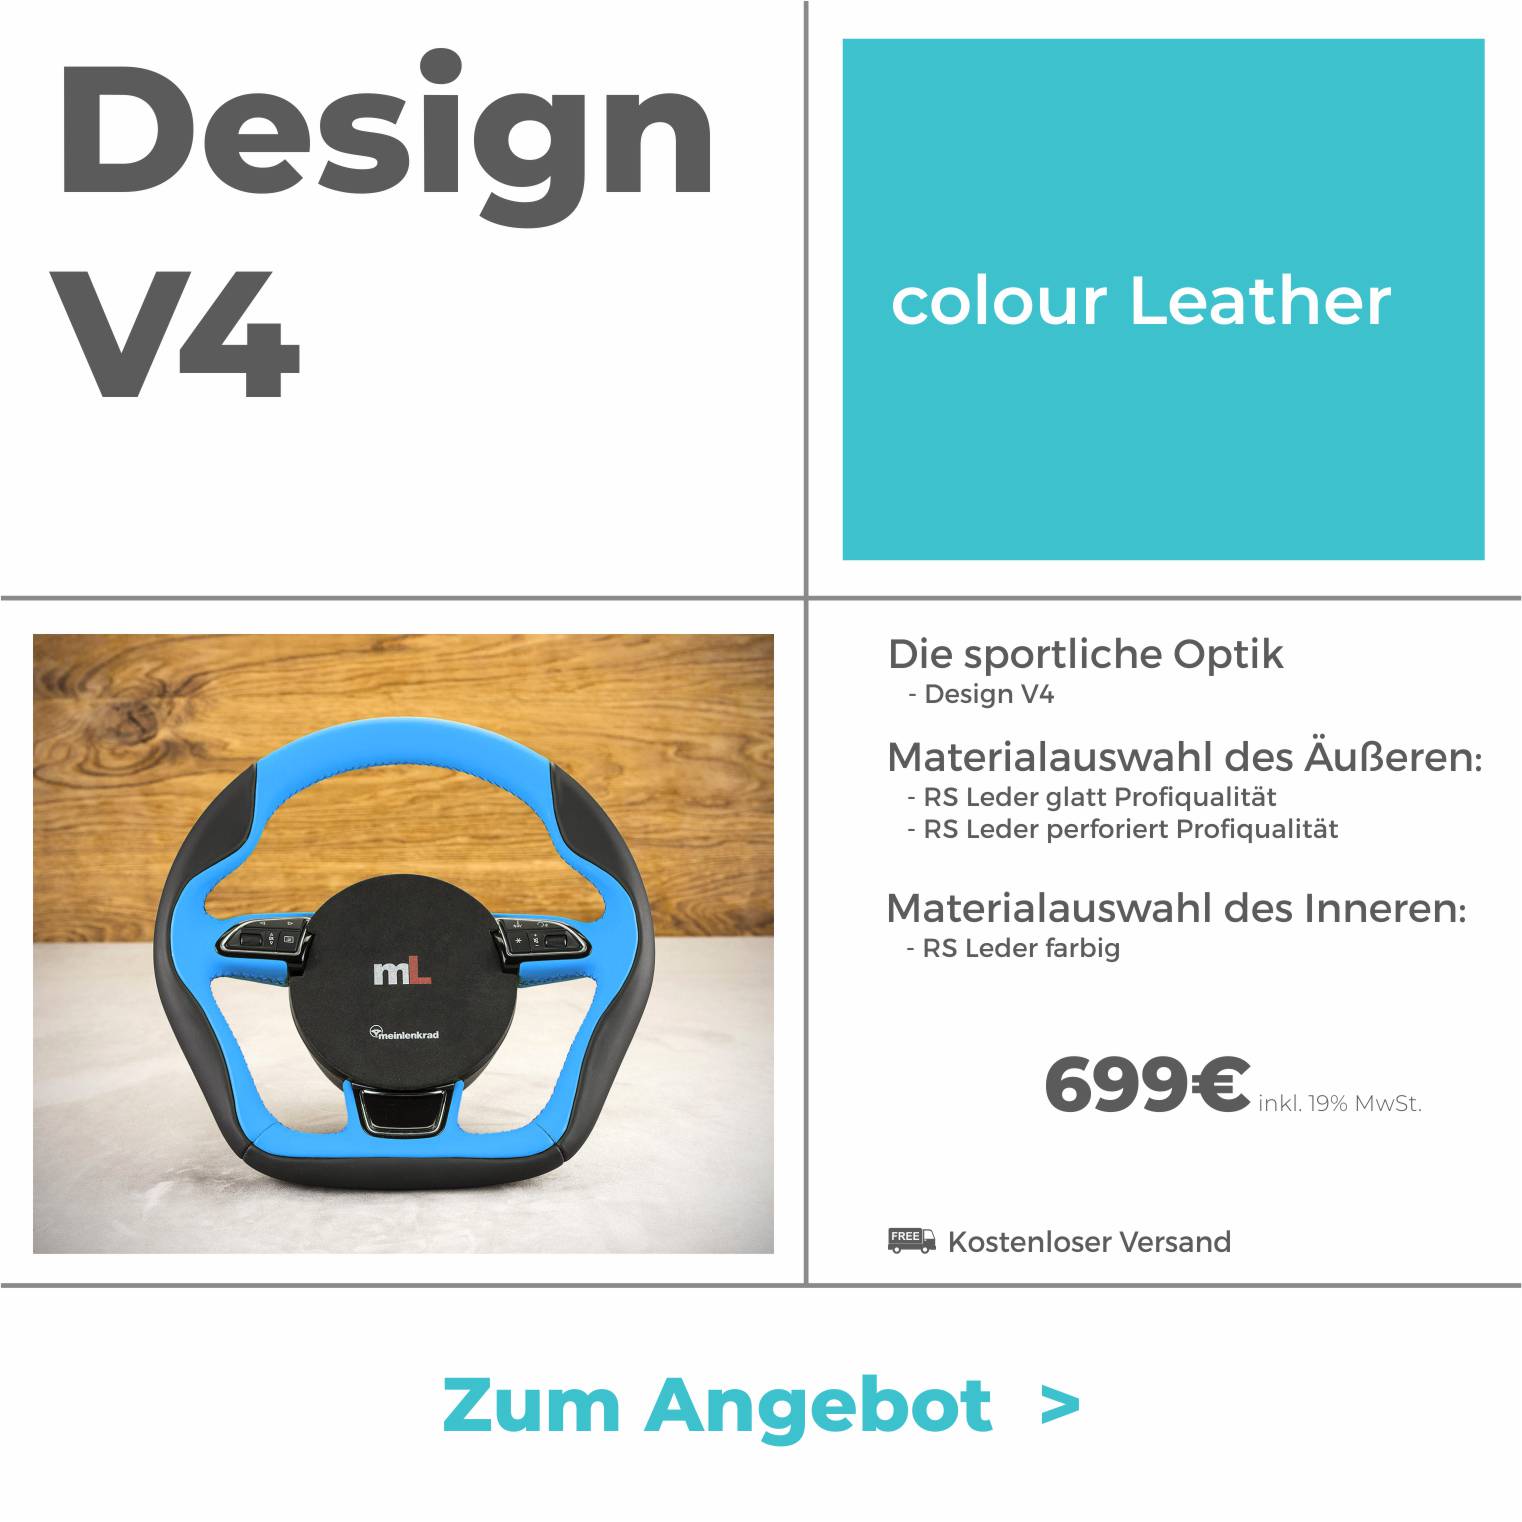 Design V4 - colour Leather